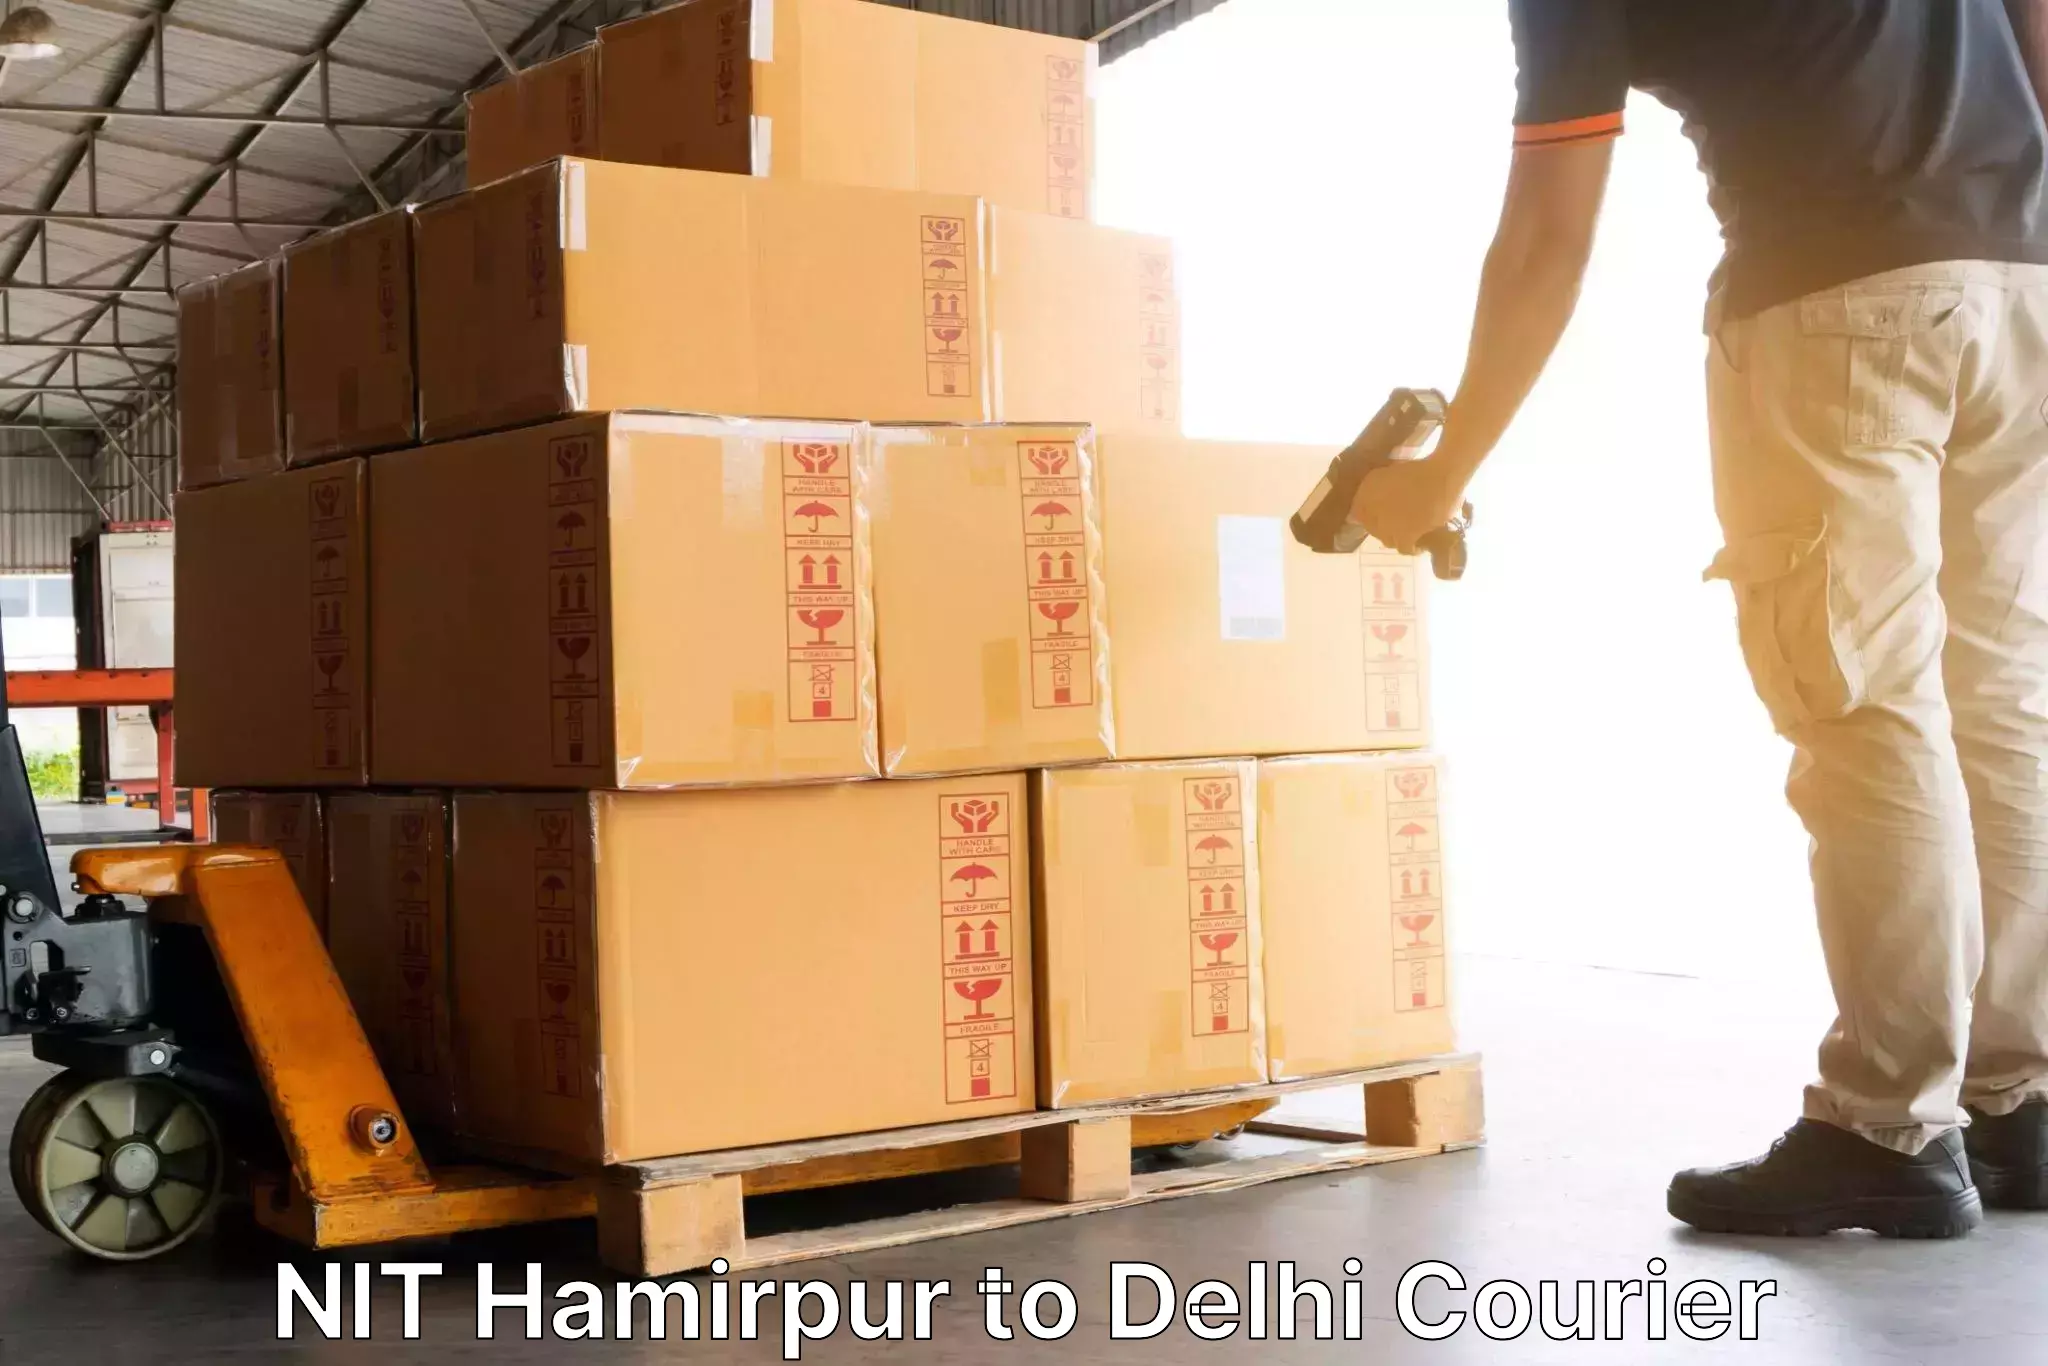 Digital courier platforms NIT Hamirpur to IIT Delhi